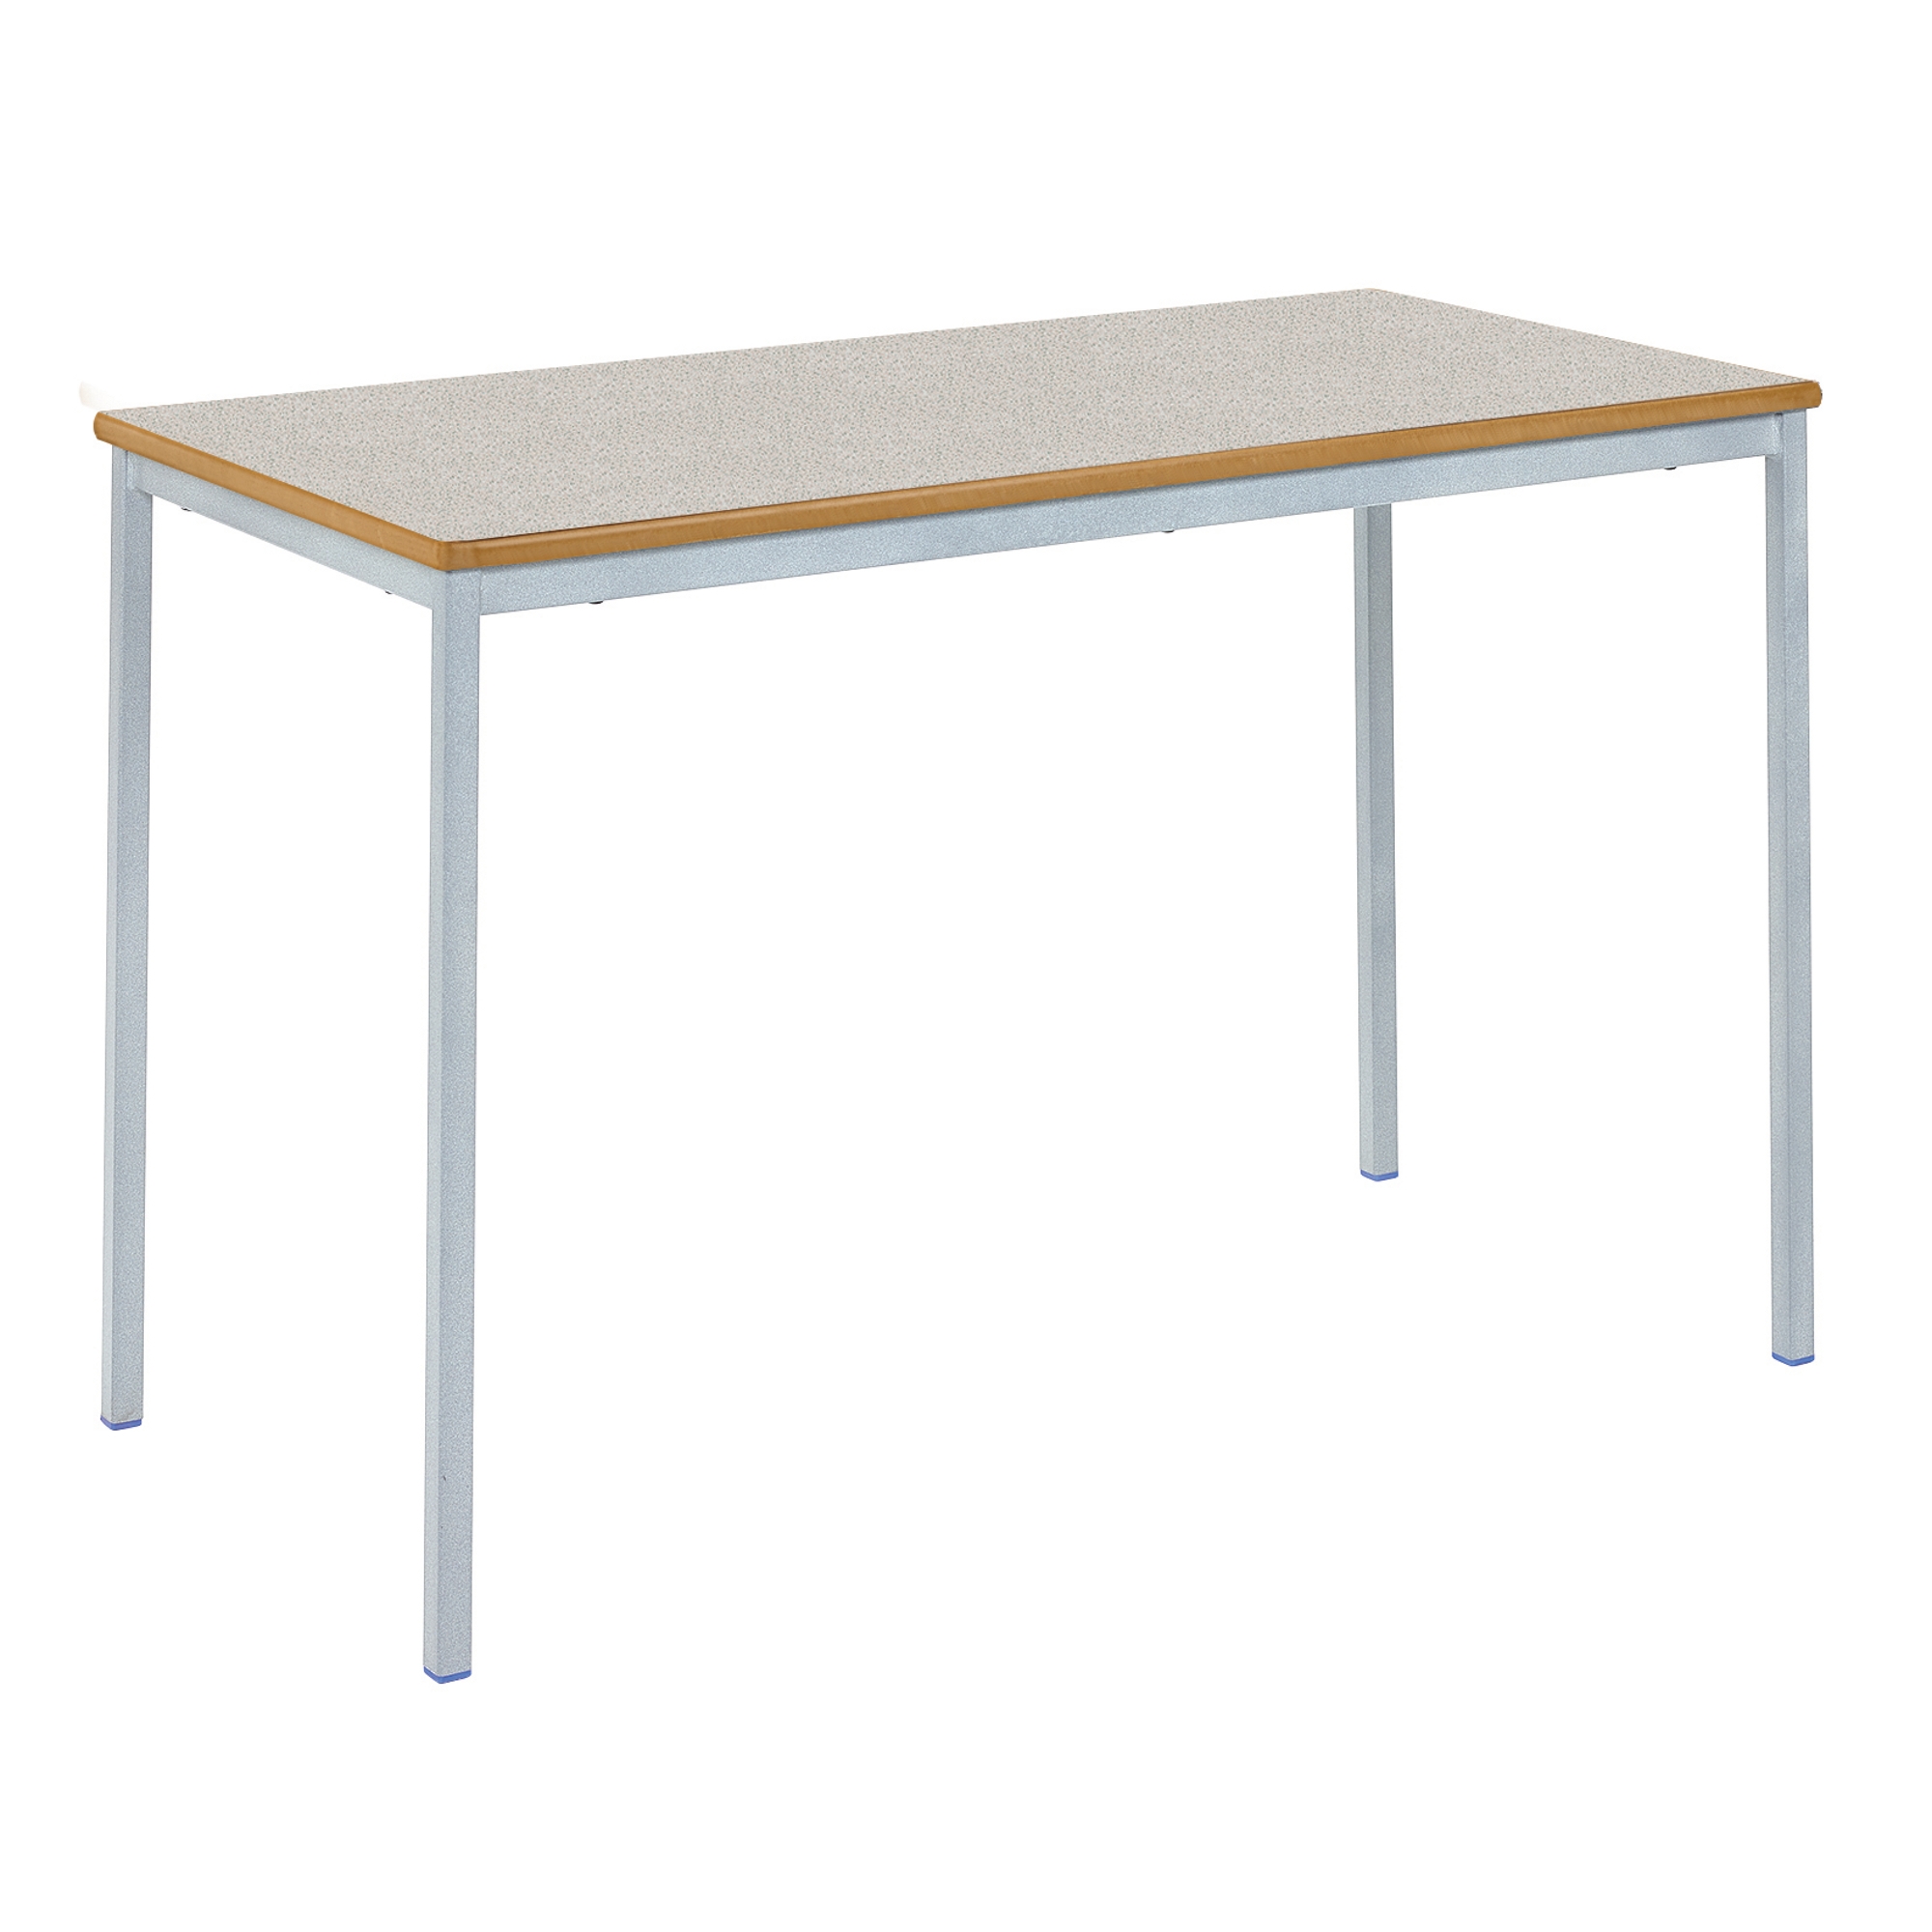 Classmates Rectangular Fully Welded Classroom Table - 1100 x 550 x 640mm - Ailsa